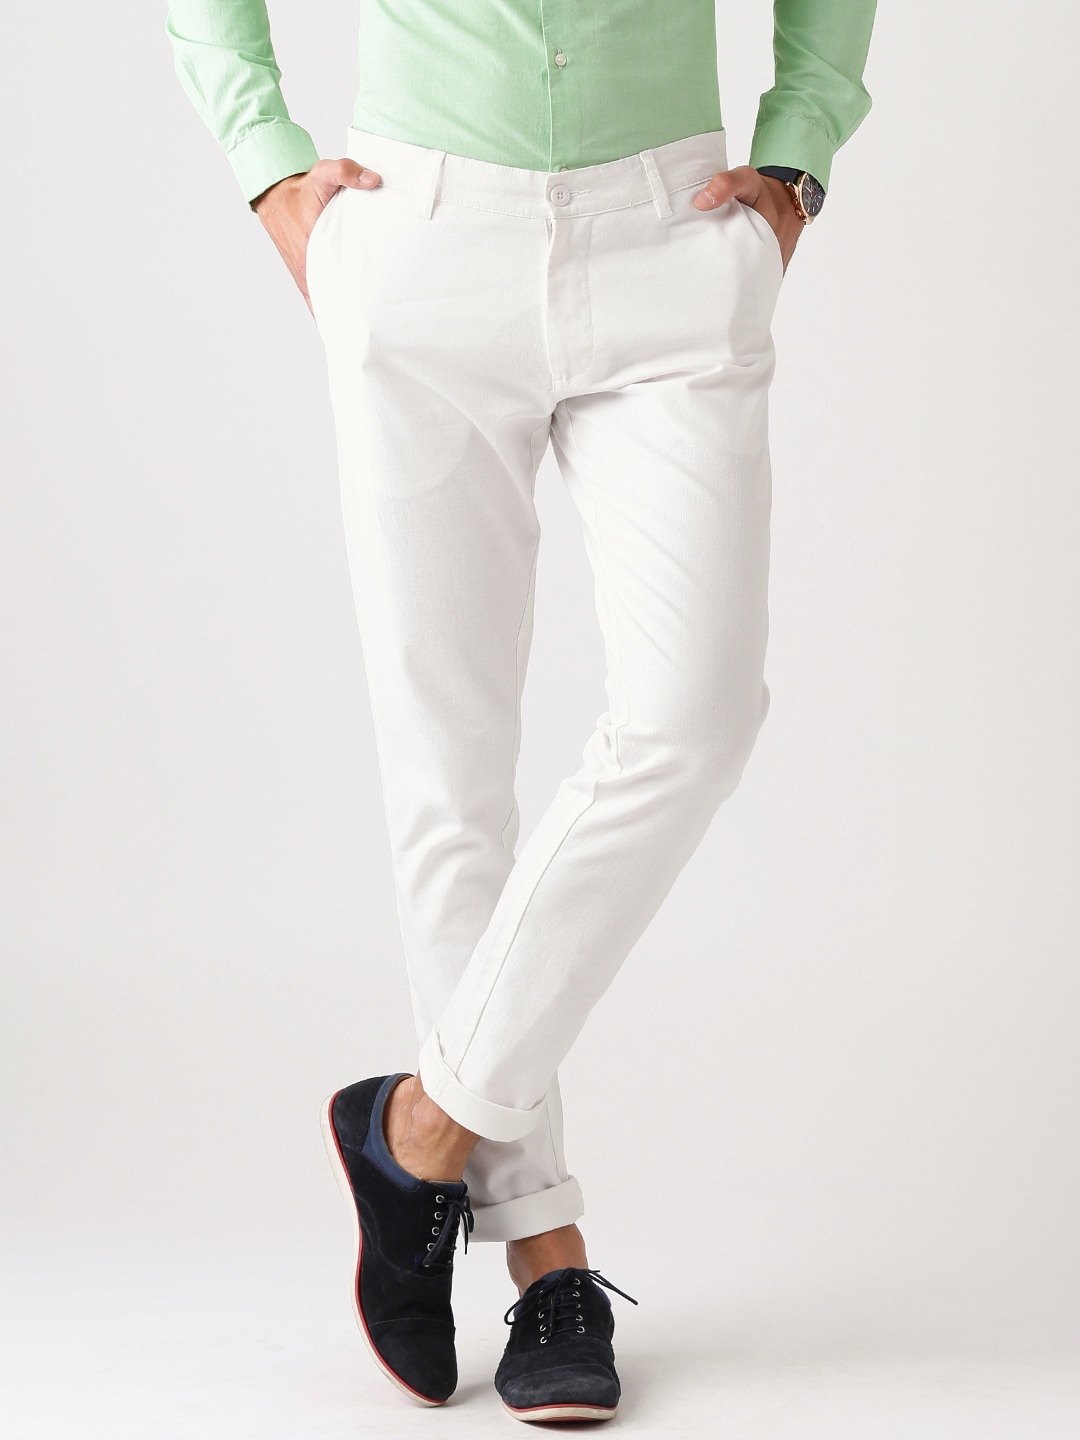 Buy White Trousers  Pants for Men by BREAKPOINT Online  Ajiocom